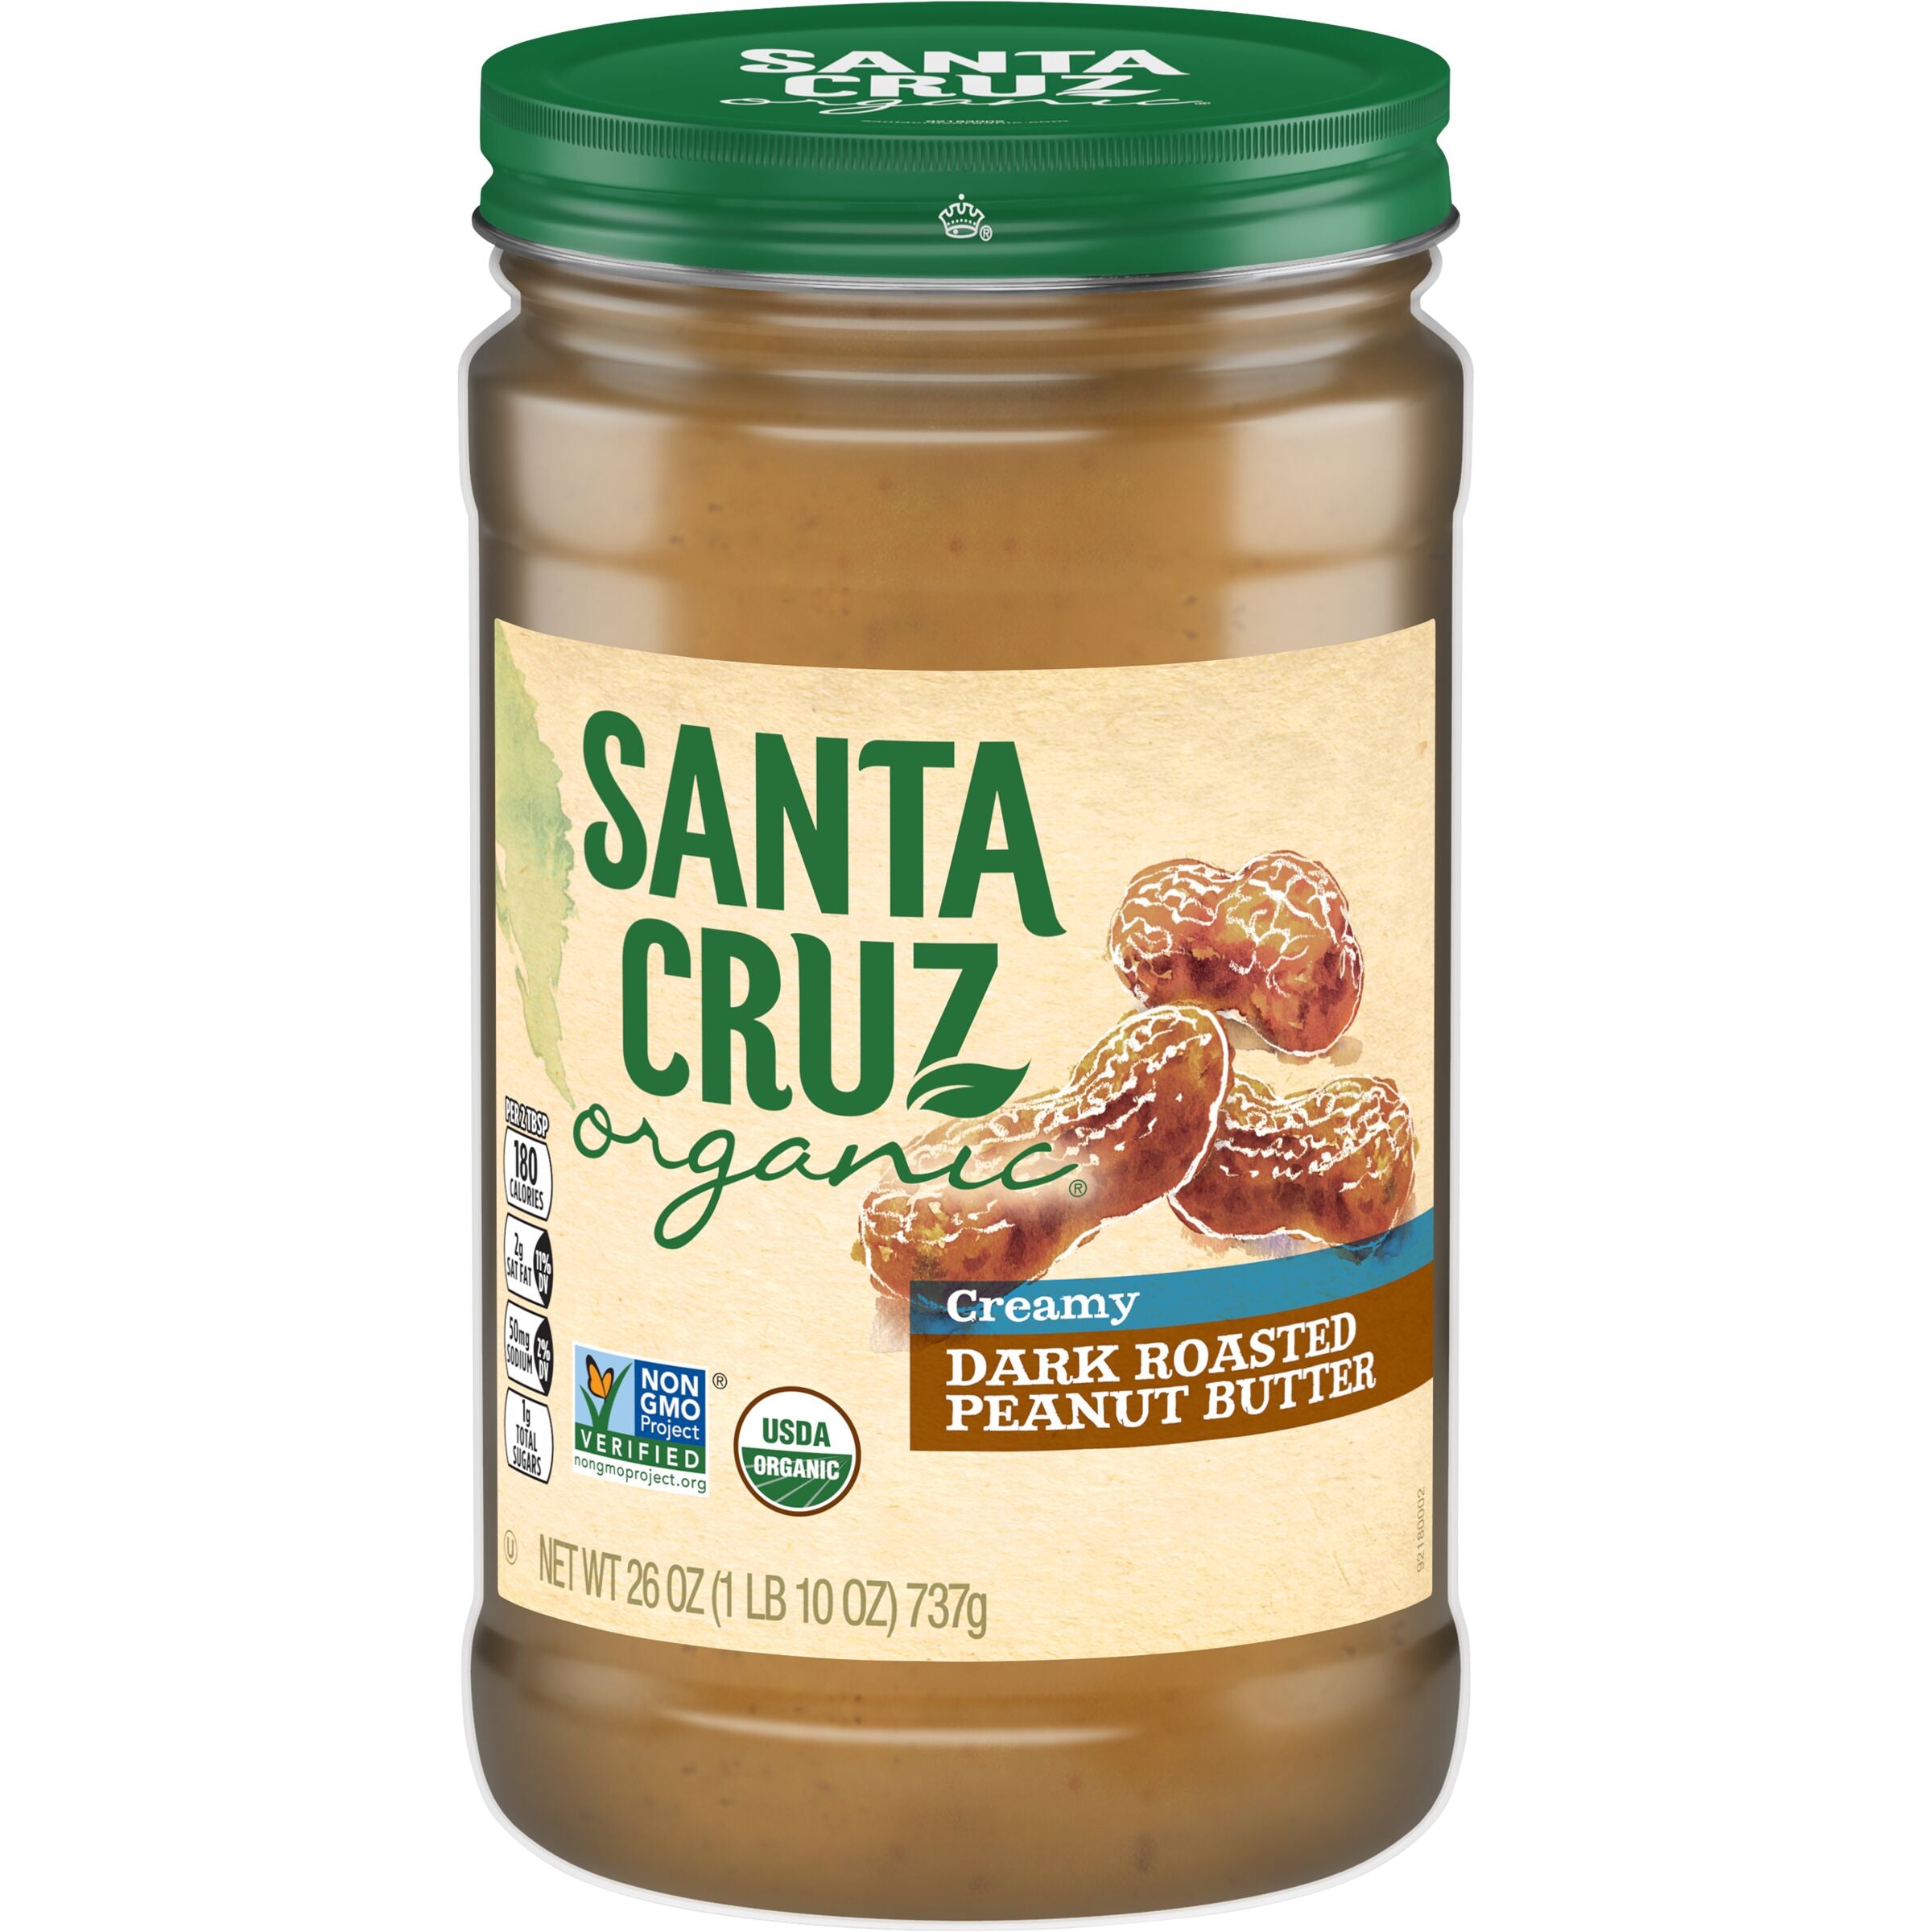 Santa Cruz Organic Creamy Dark Roasted Peanut Butter